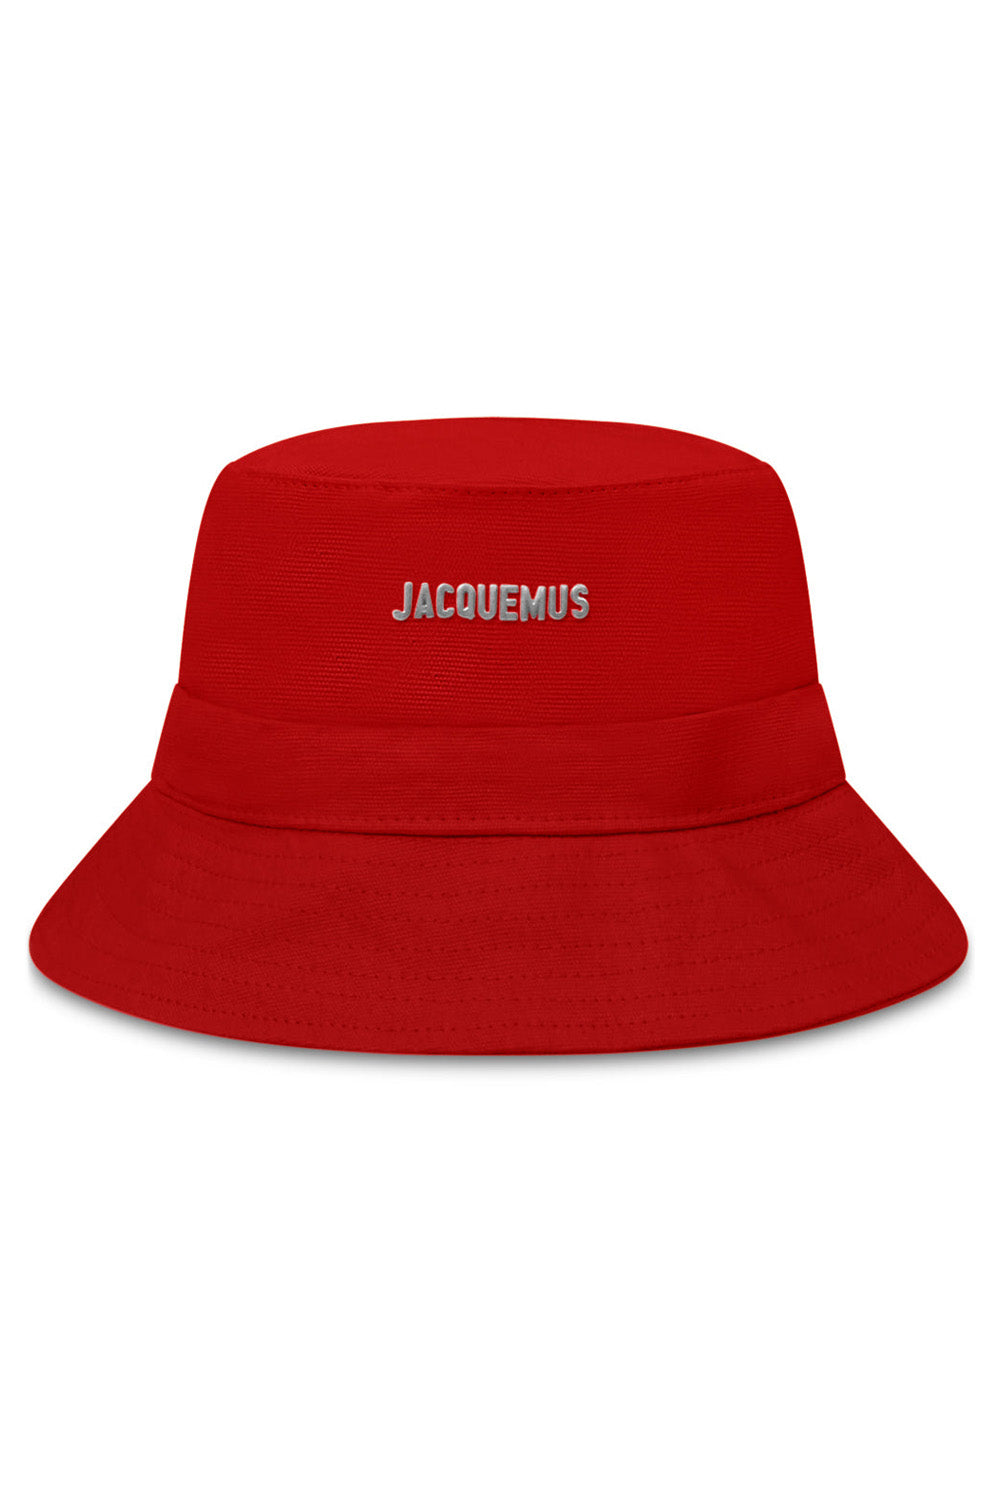 JACQUEMUS HATS LE BOB GADJO BUCKET HAT | RED